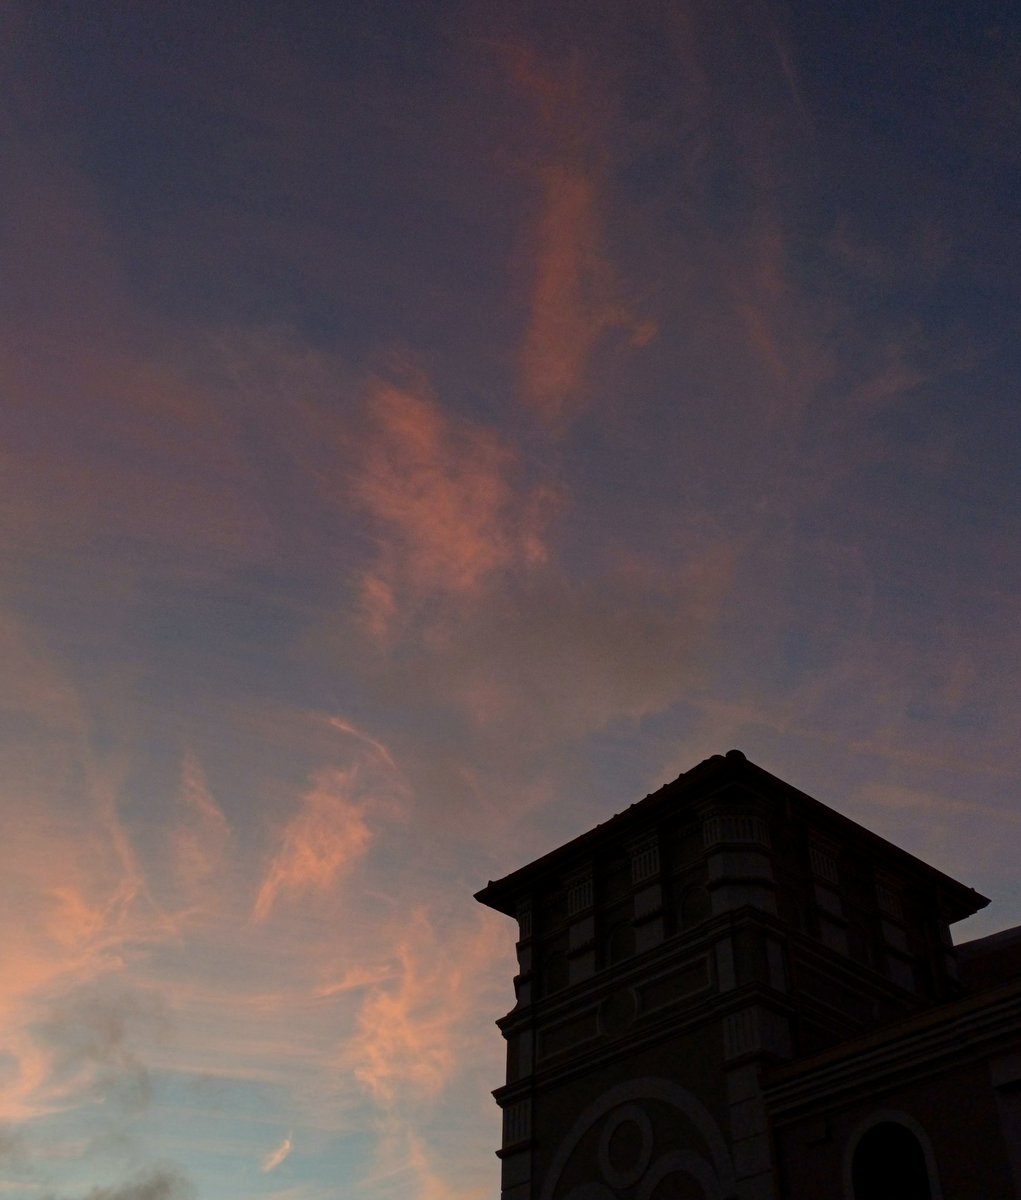 🌇

#skyscapes #sunsetskies #urbanjungle #anotherdaydone #wheretheskymeetstheland 

instagram.com/p/C6O2L_3NPgj/